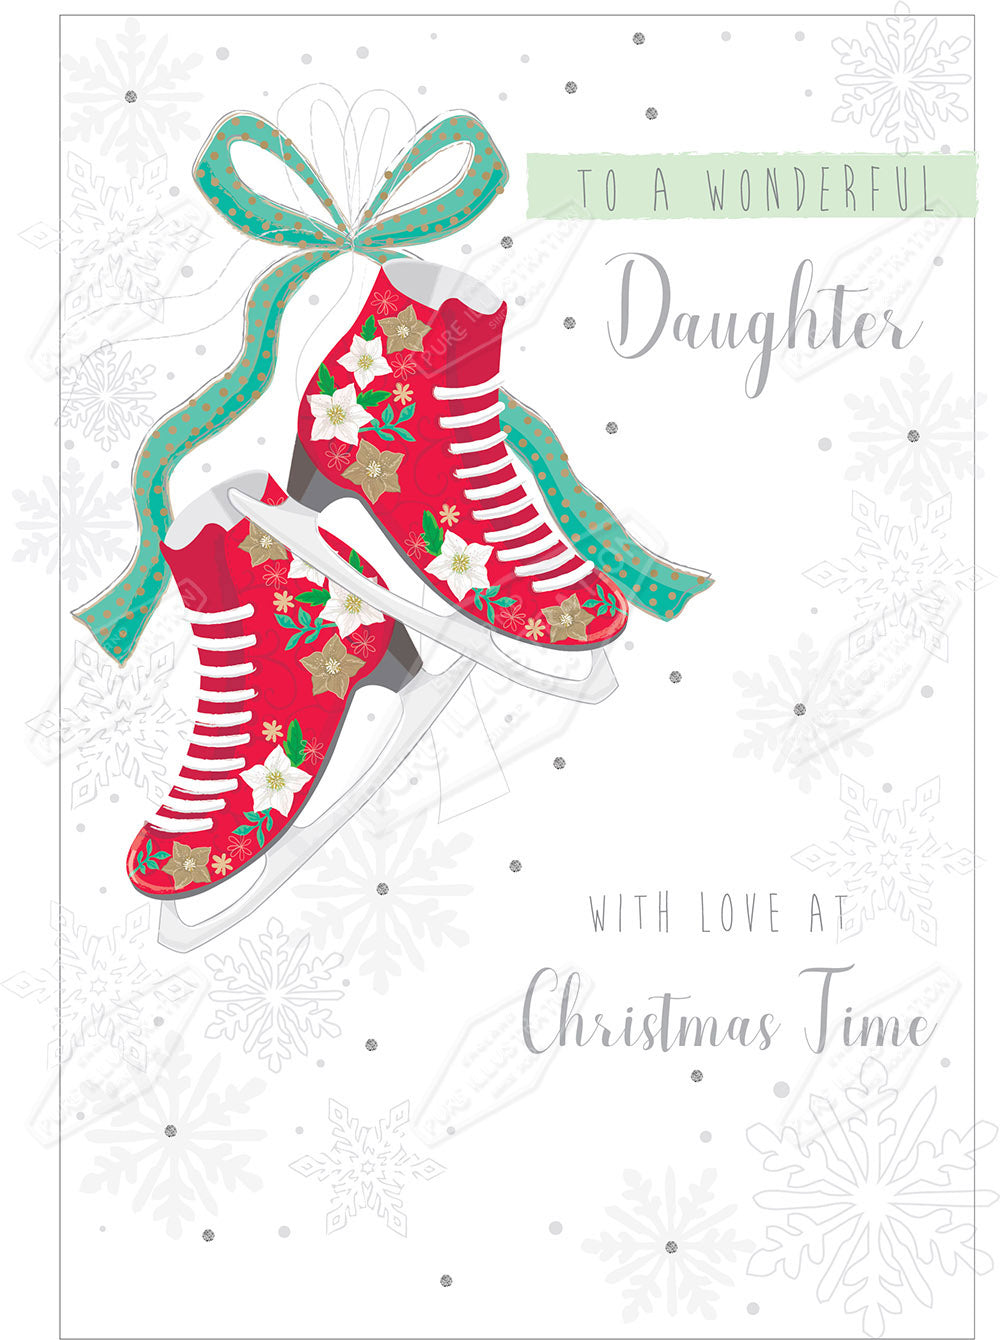 00032144AMC - Amanda McDonough is represented by Pure Art Licensing Agency - Christmas Greeting Card Design